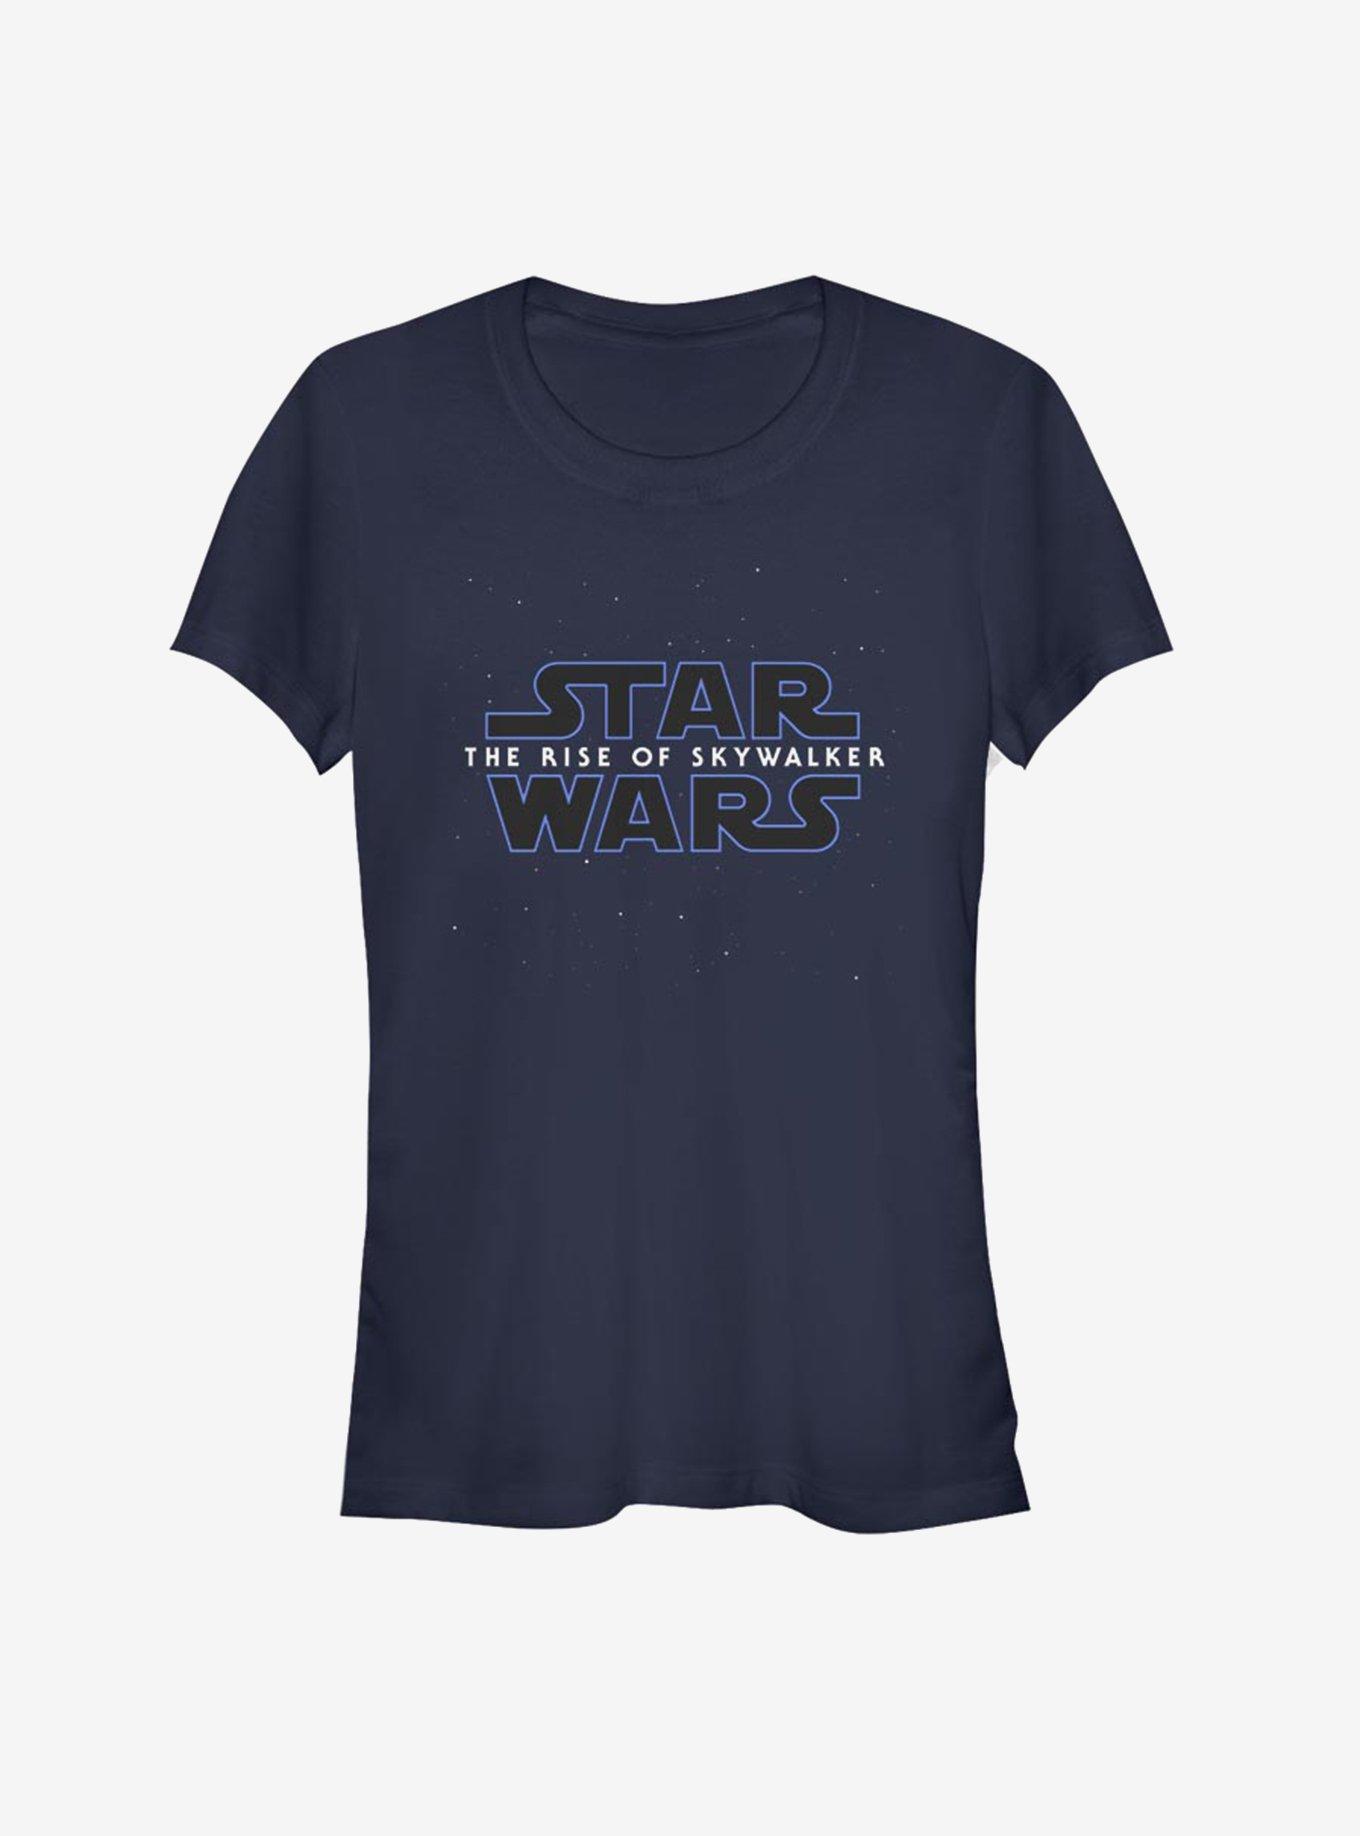 Star Wars: The Rise of Skywalker Stars Girls T-Shirt, NAVY, hi-res